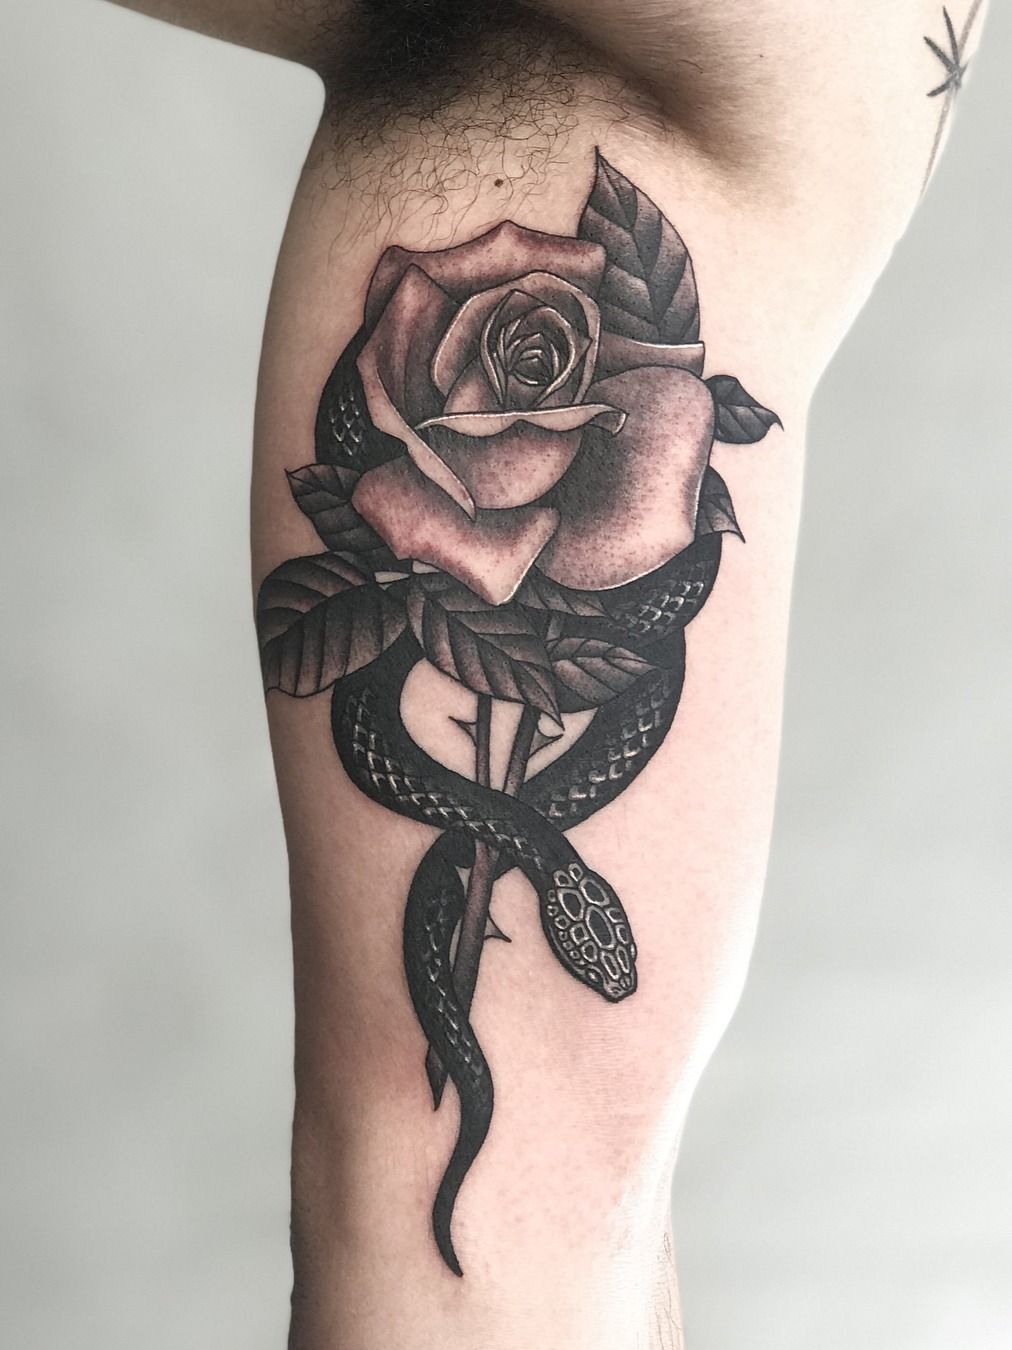 Top 81 Best Rose Tattoos For Men  2021 Inspiration Guide  Rose tattoos  for men Rose tattoos for women Tattoos for guys